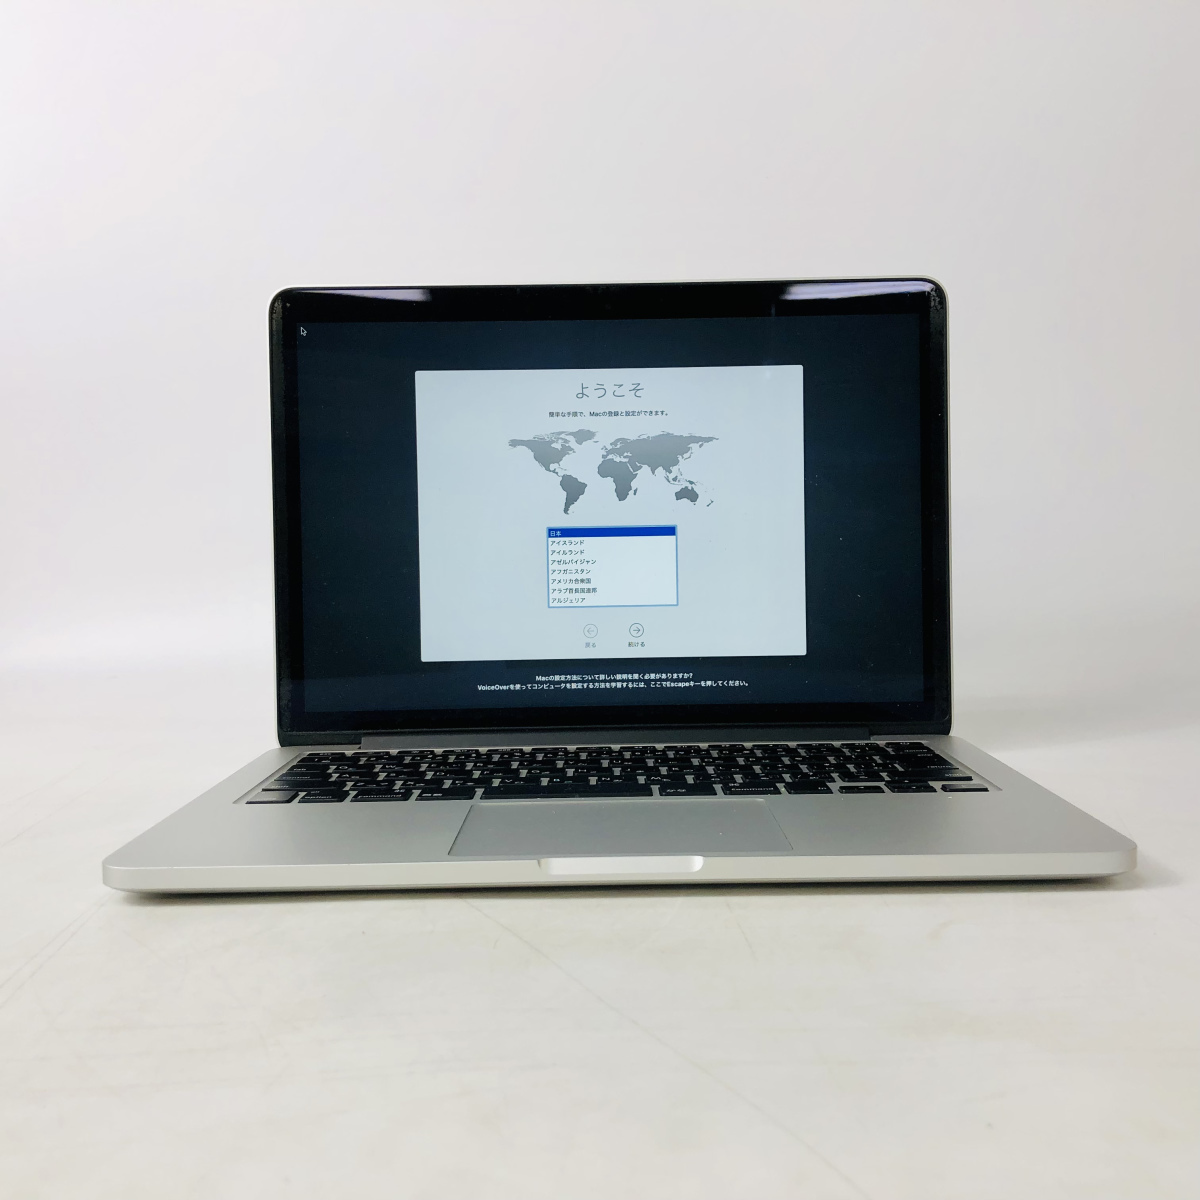 免税物品 MacBook Pro MF839J/A 2015 Early 13-inch PC周辺機器